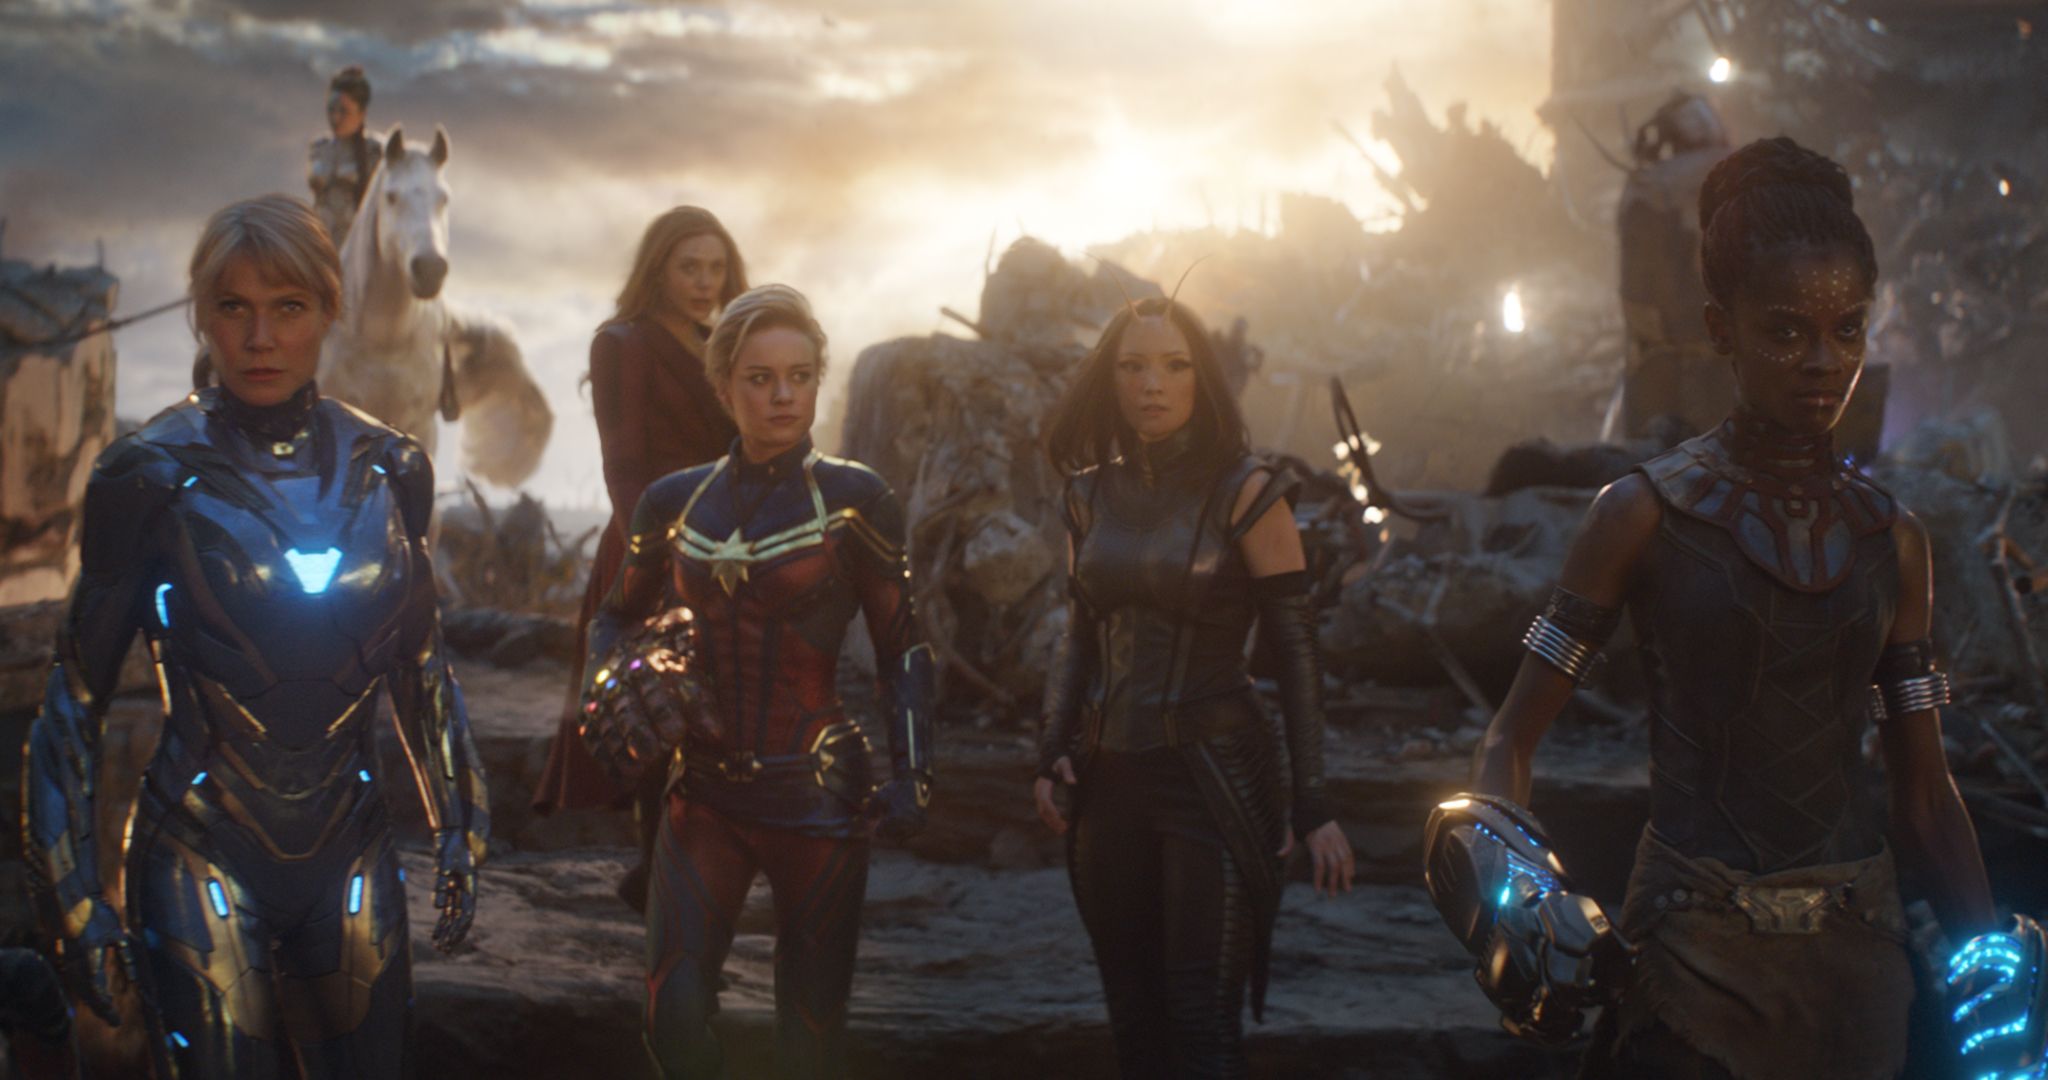 Marvel's Avengers: Endgame: Own It Tuesday, August 13th!